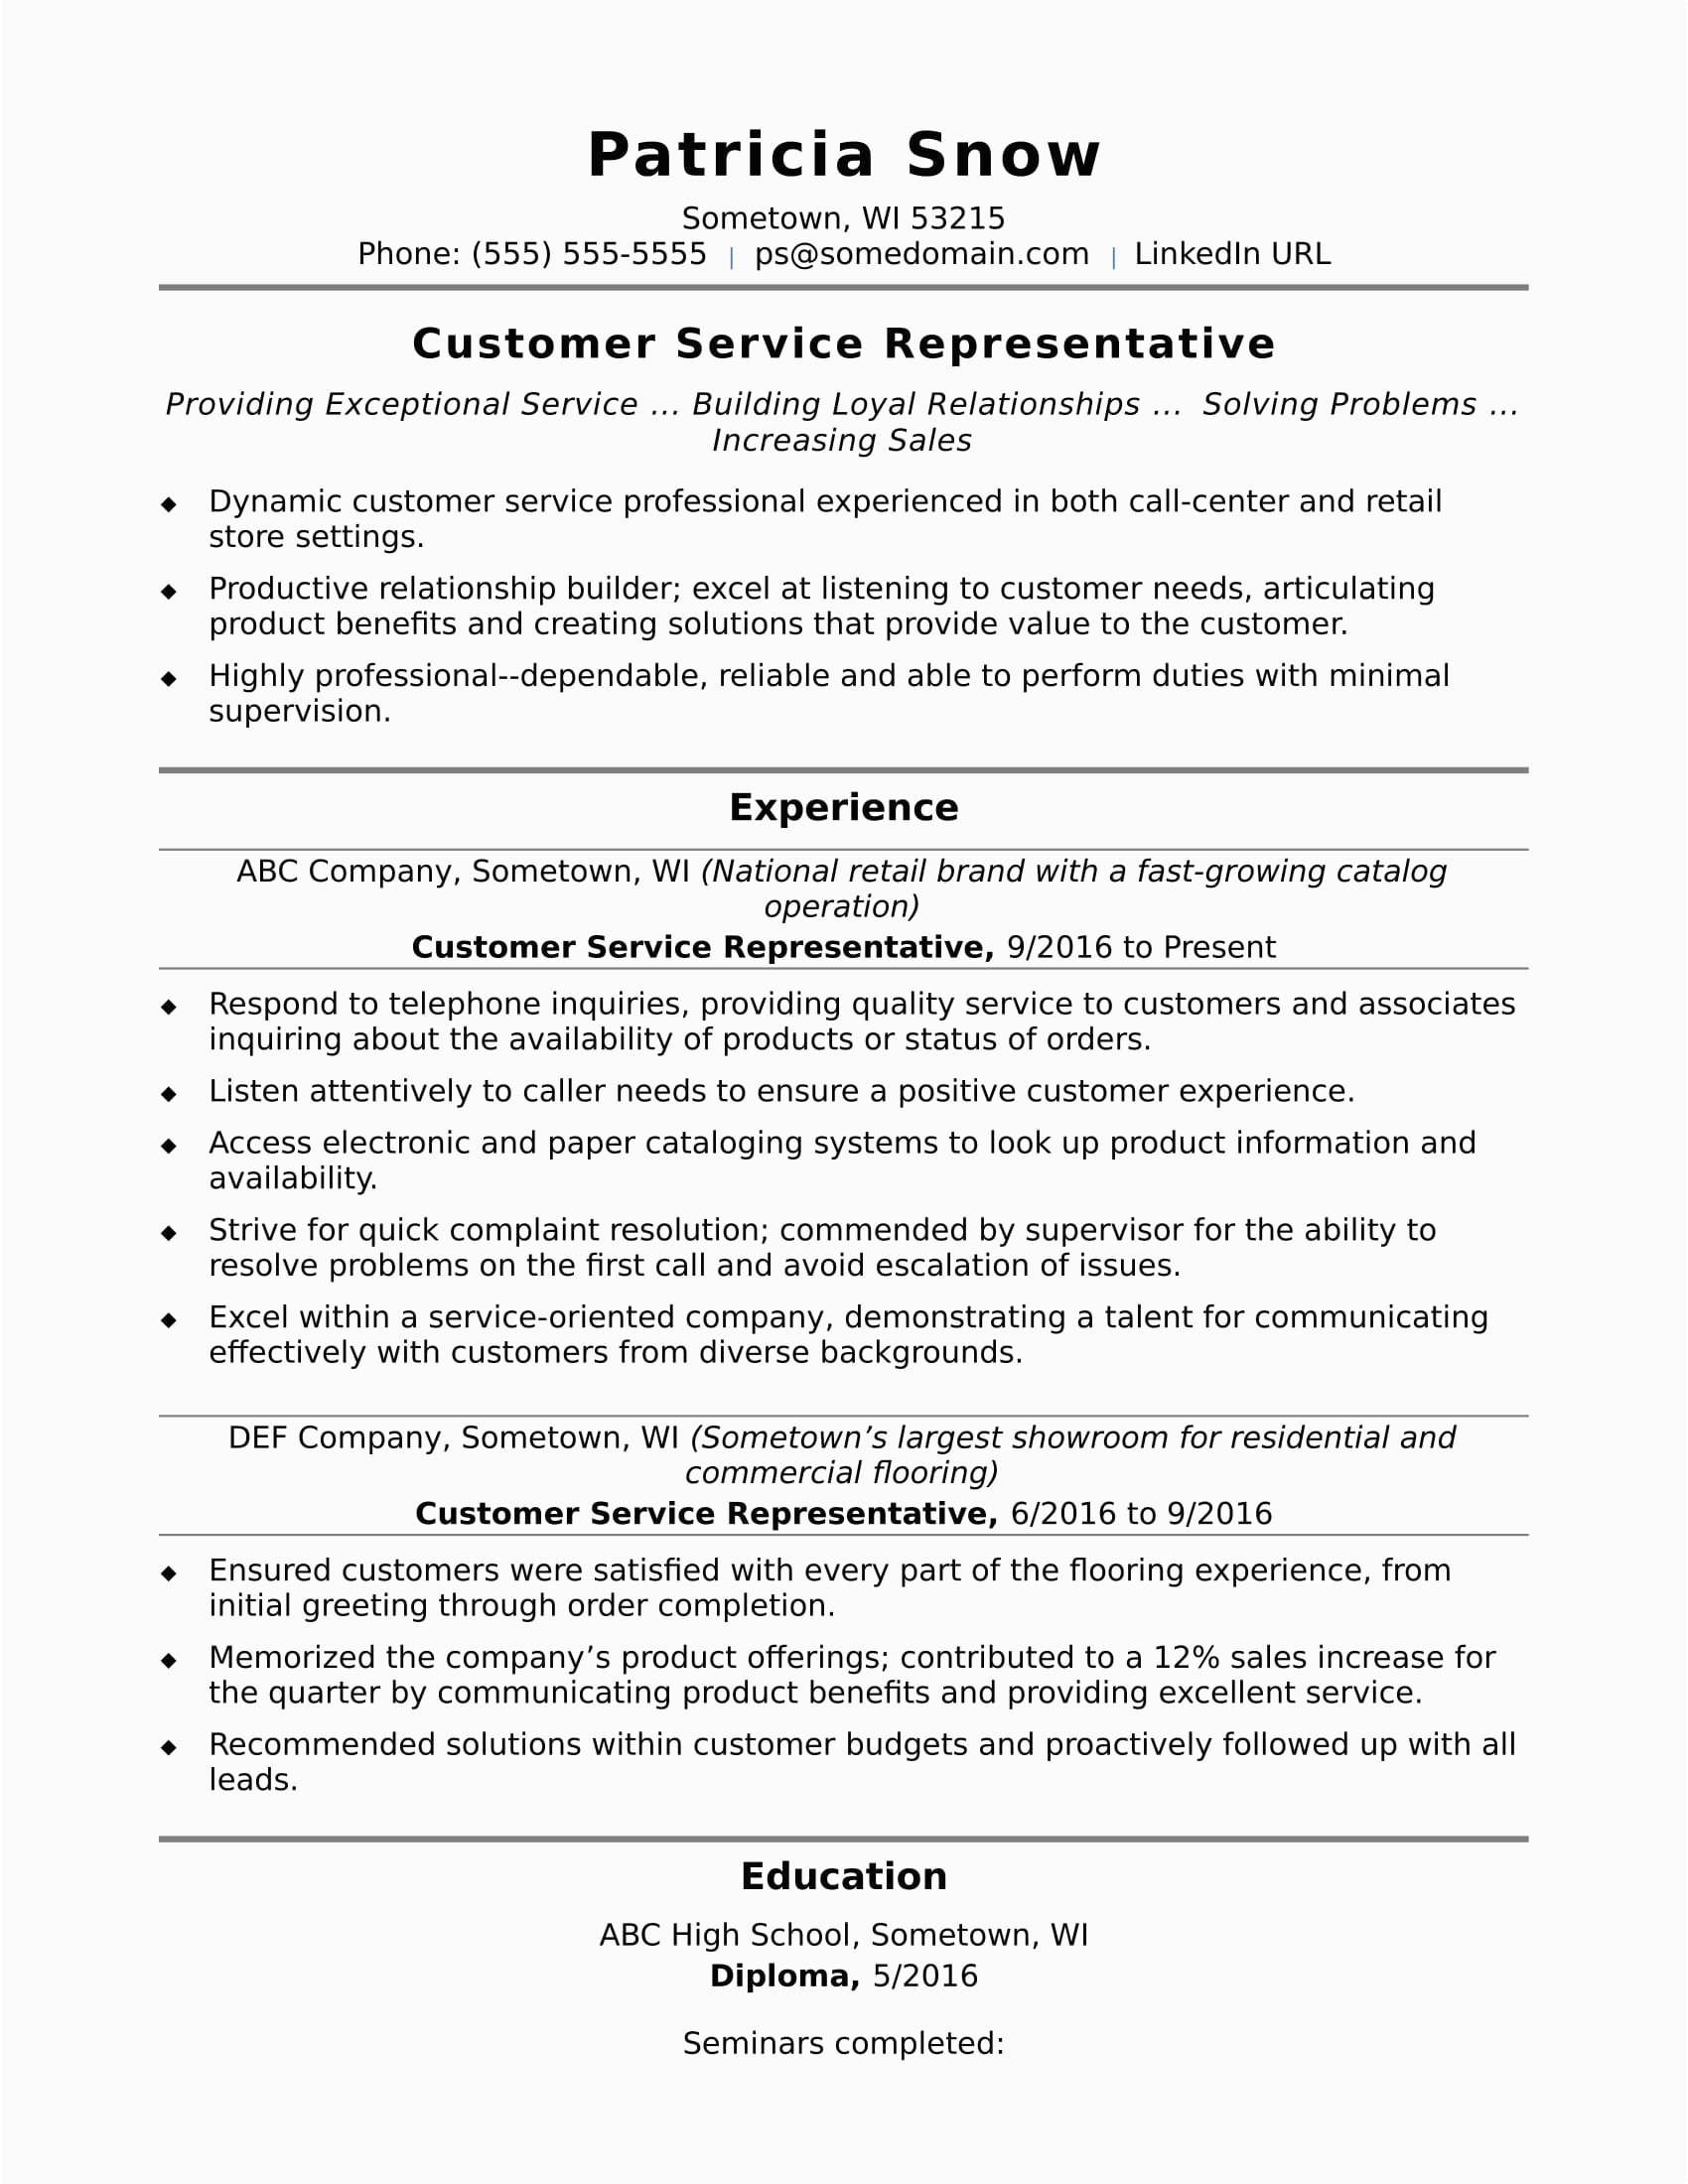 Sample Resumes for Entry Level Customer Service Jobs Entry Level Customer Service Resume Sample